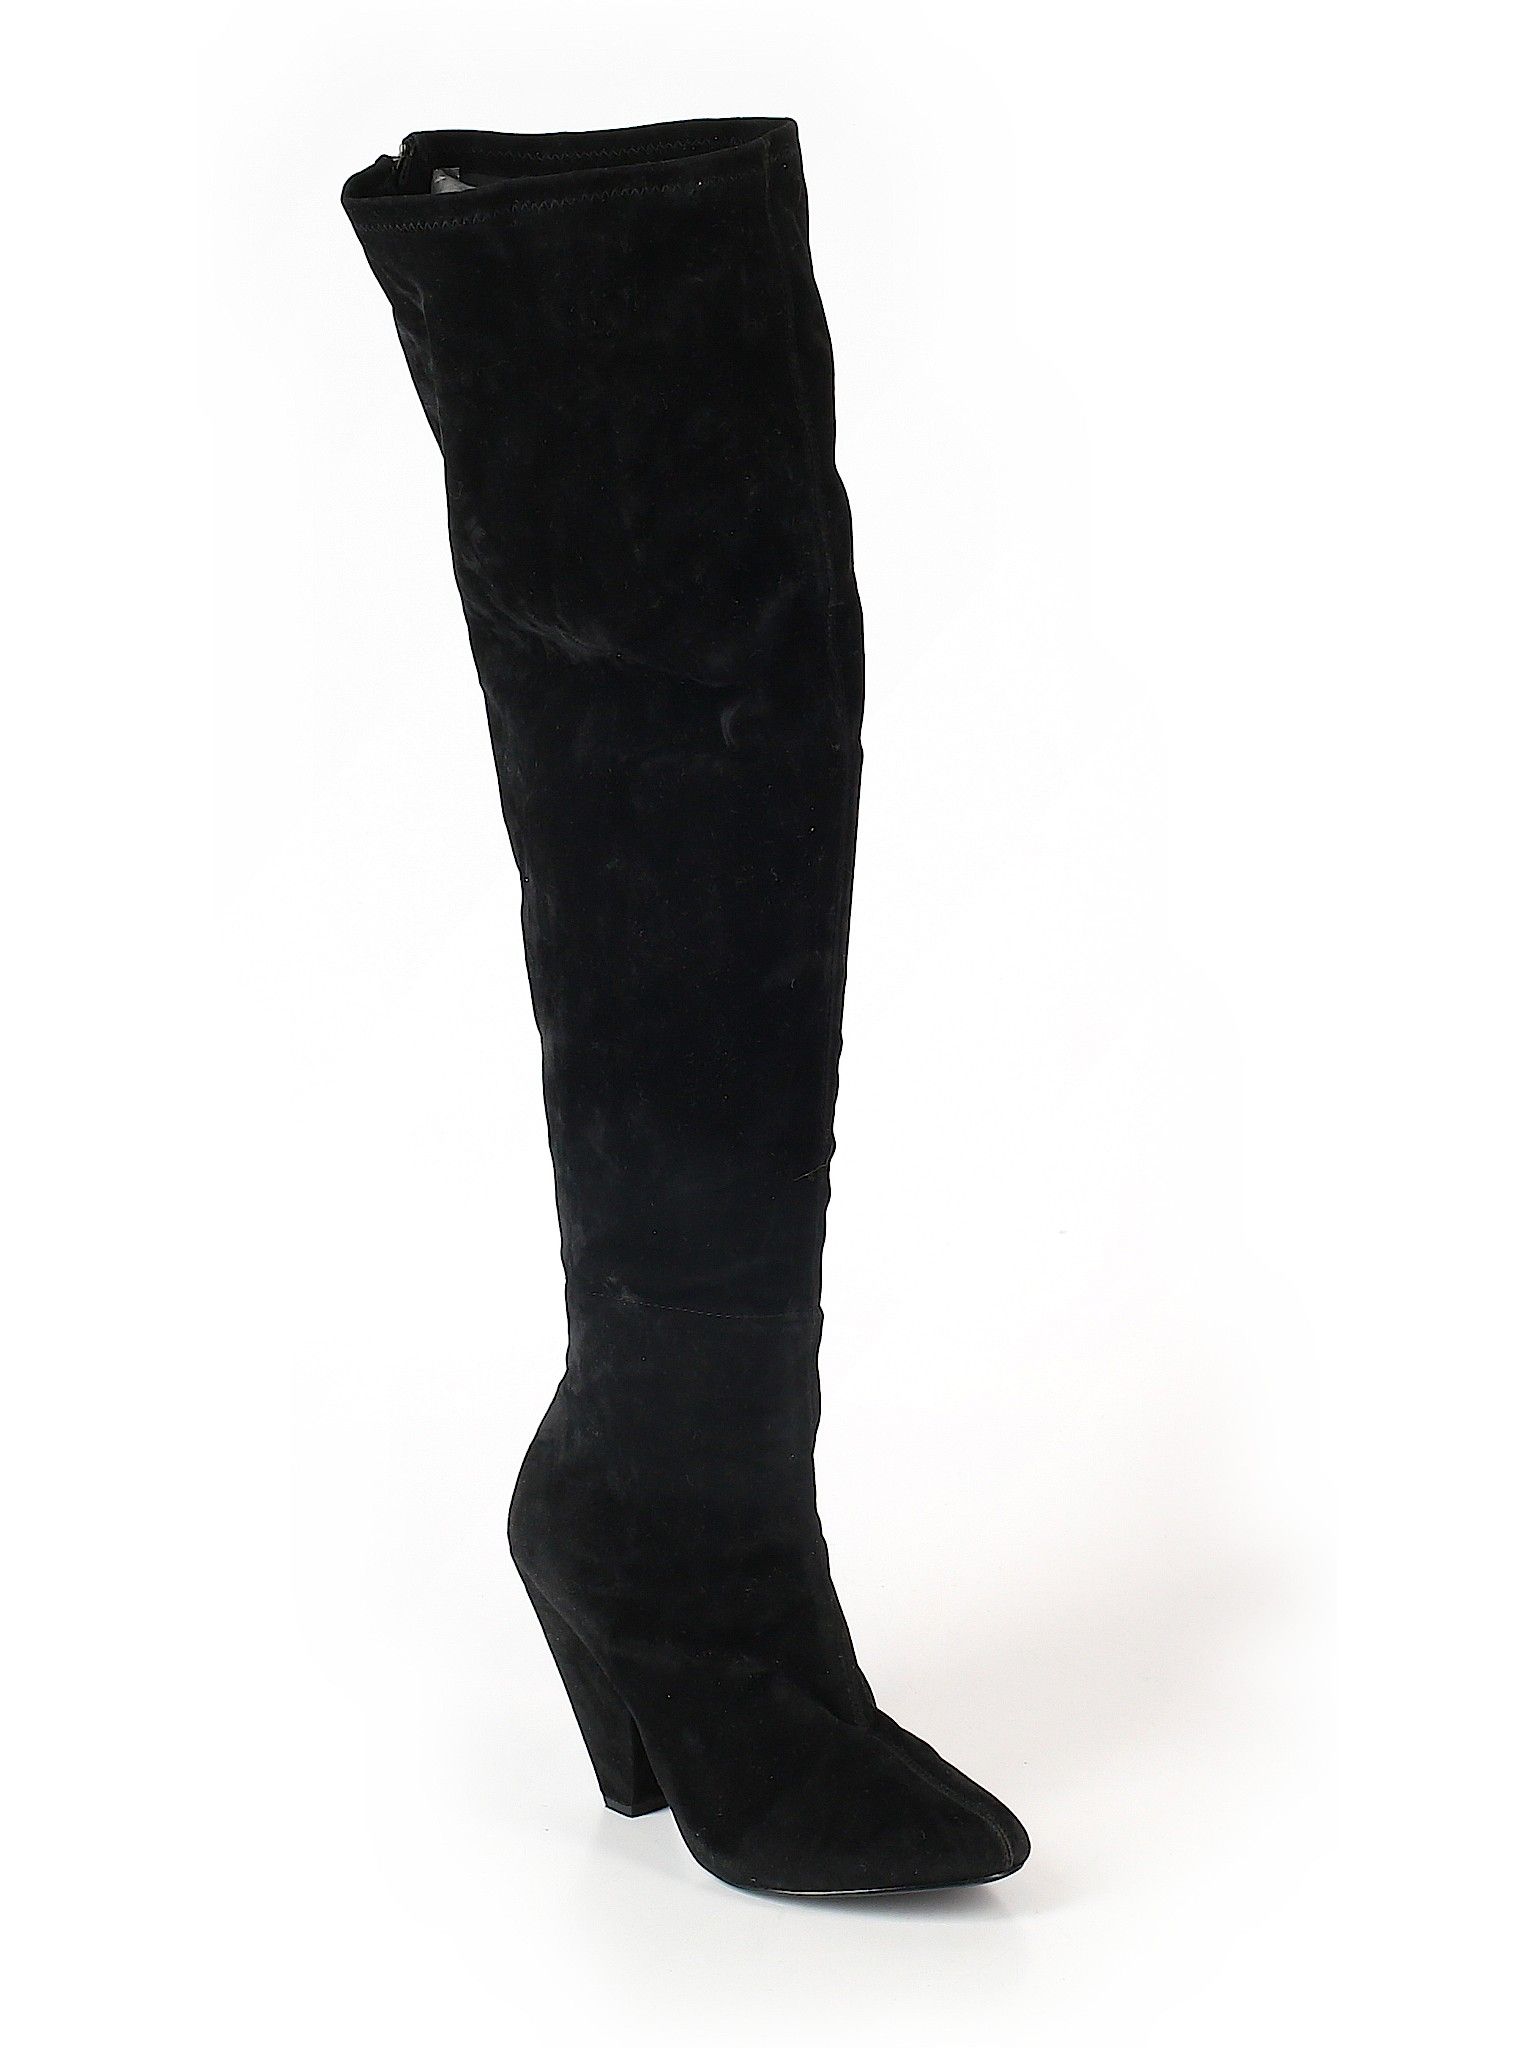 Steve Madden Boots Size 8 1/2: Black Women's Clothing - 43070078 | thredUP